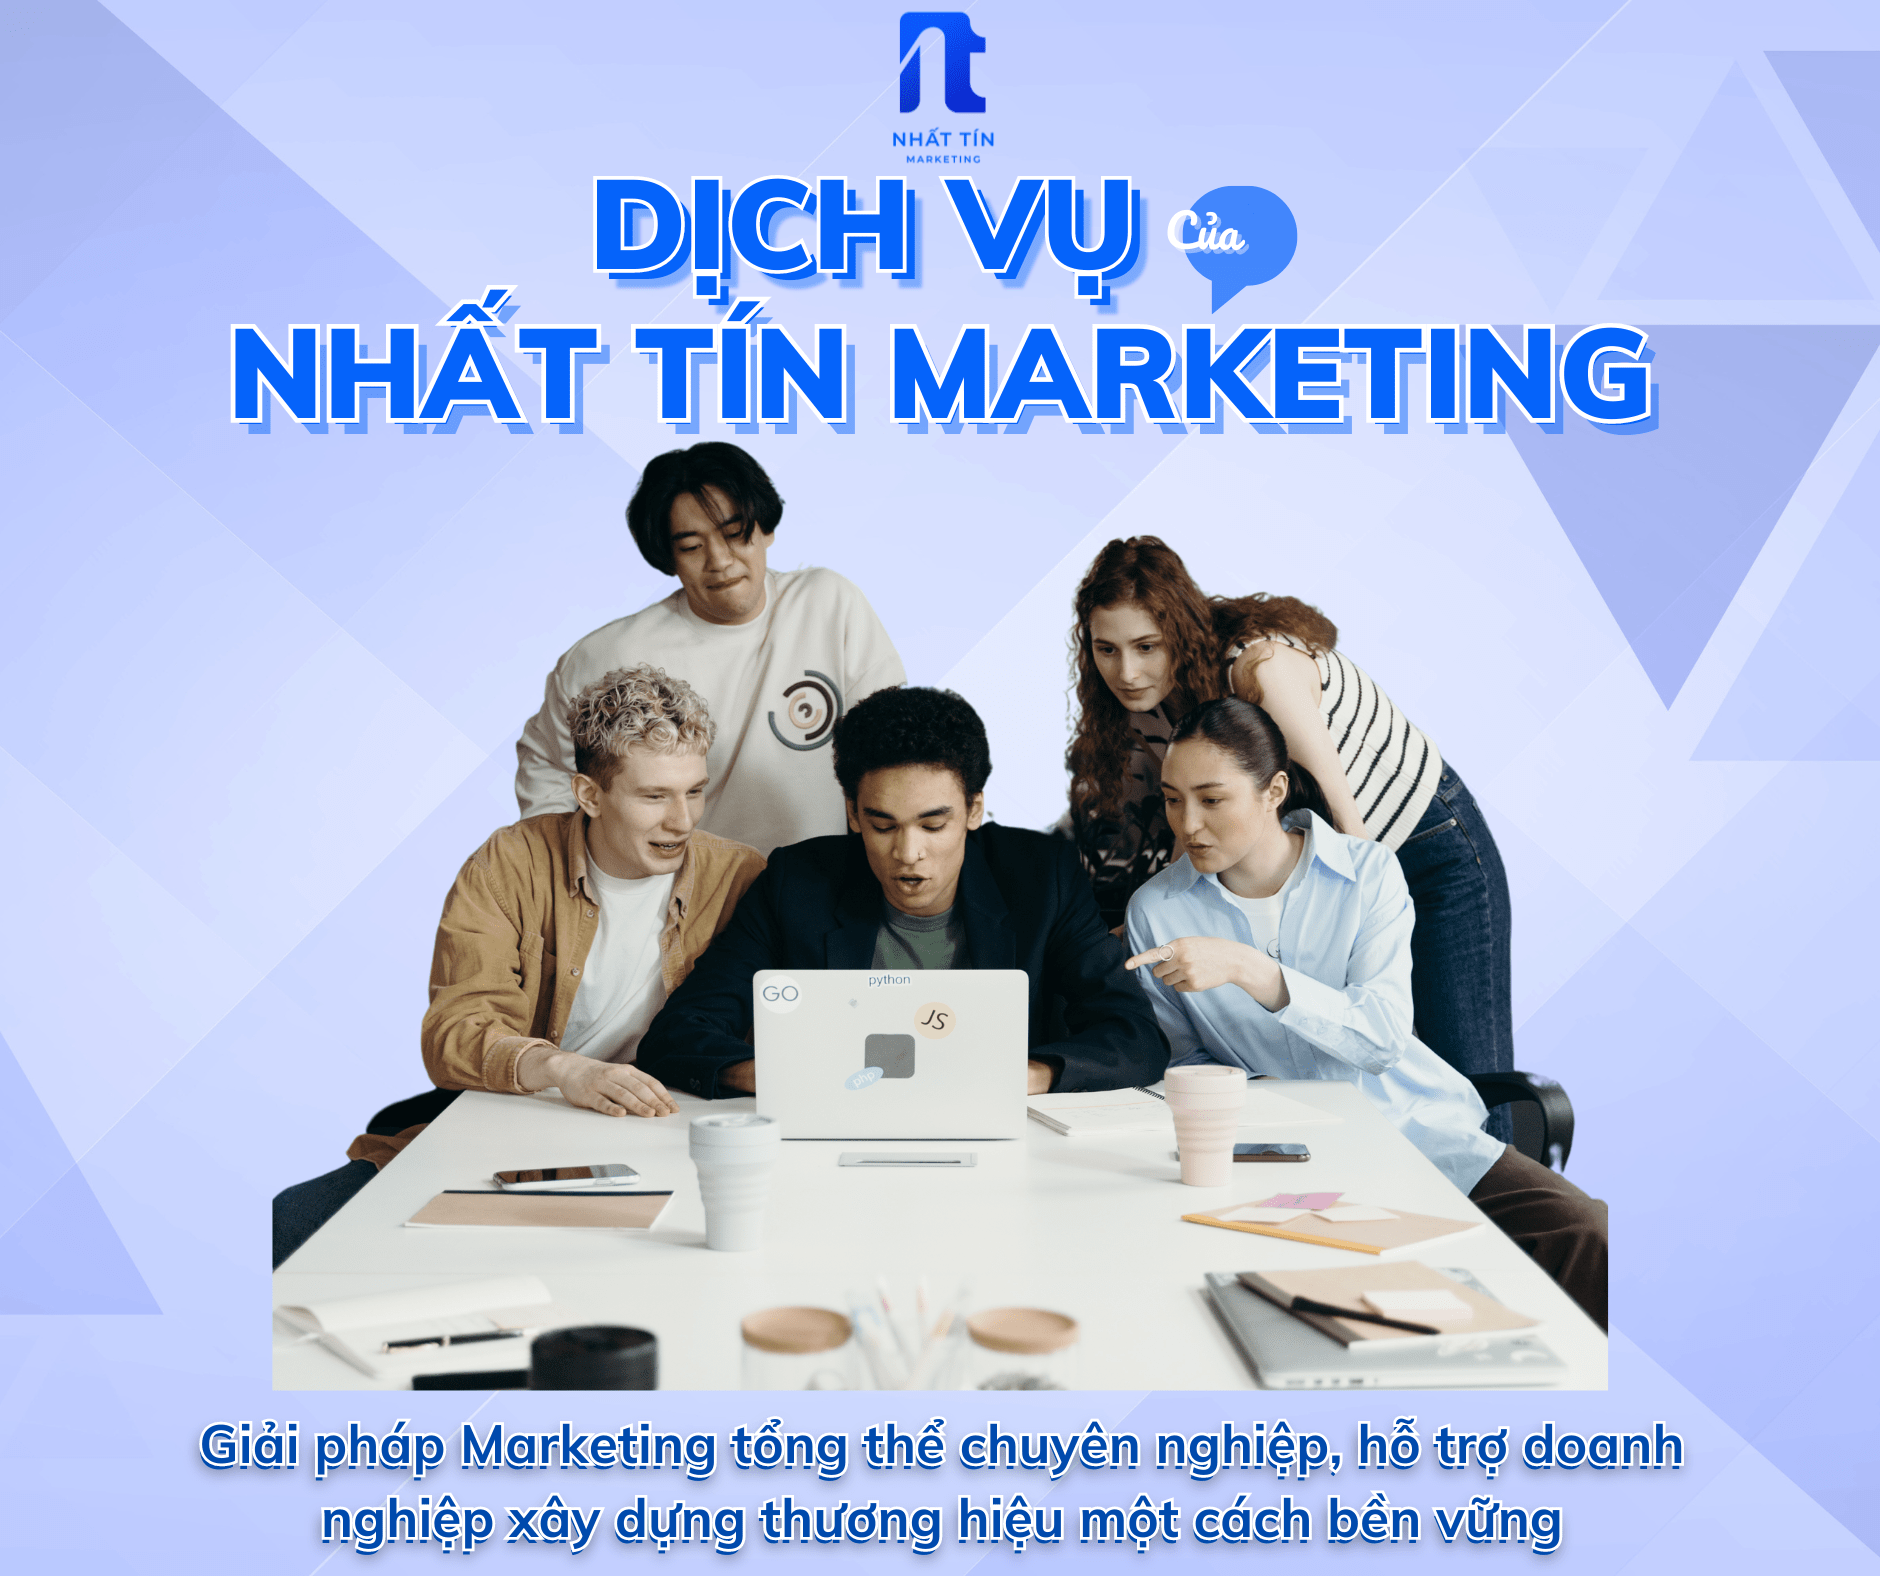 dich-vu-marketing-tong-the-nhat-tin-marketing.png